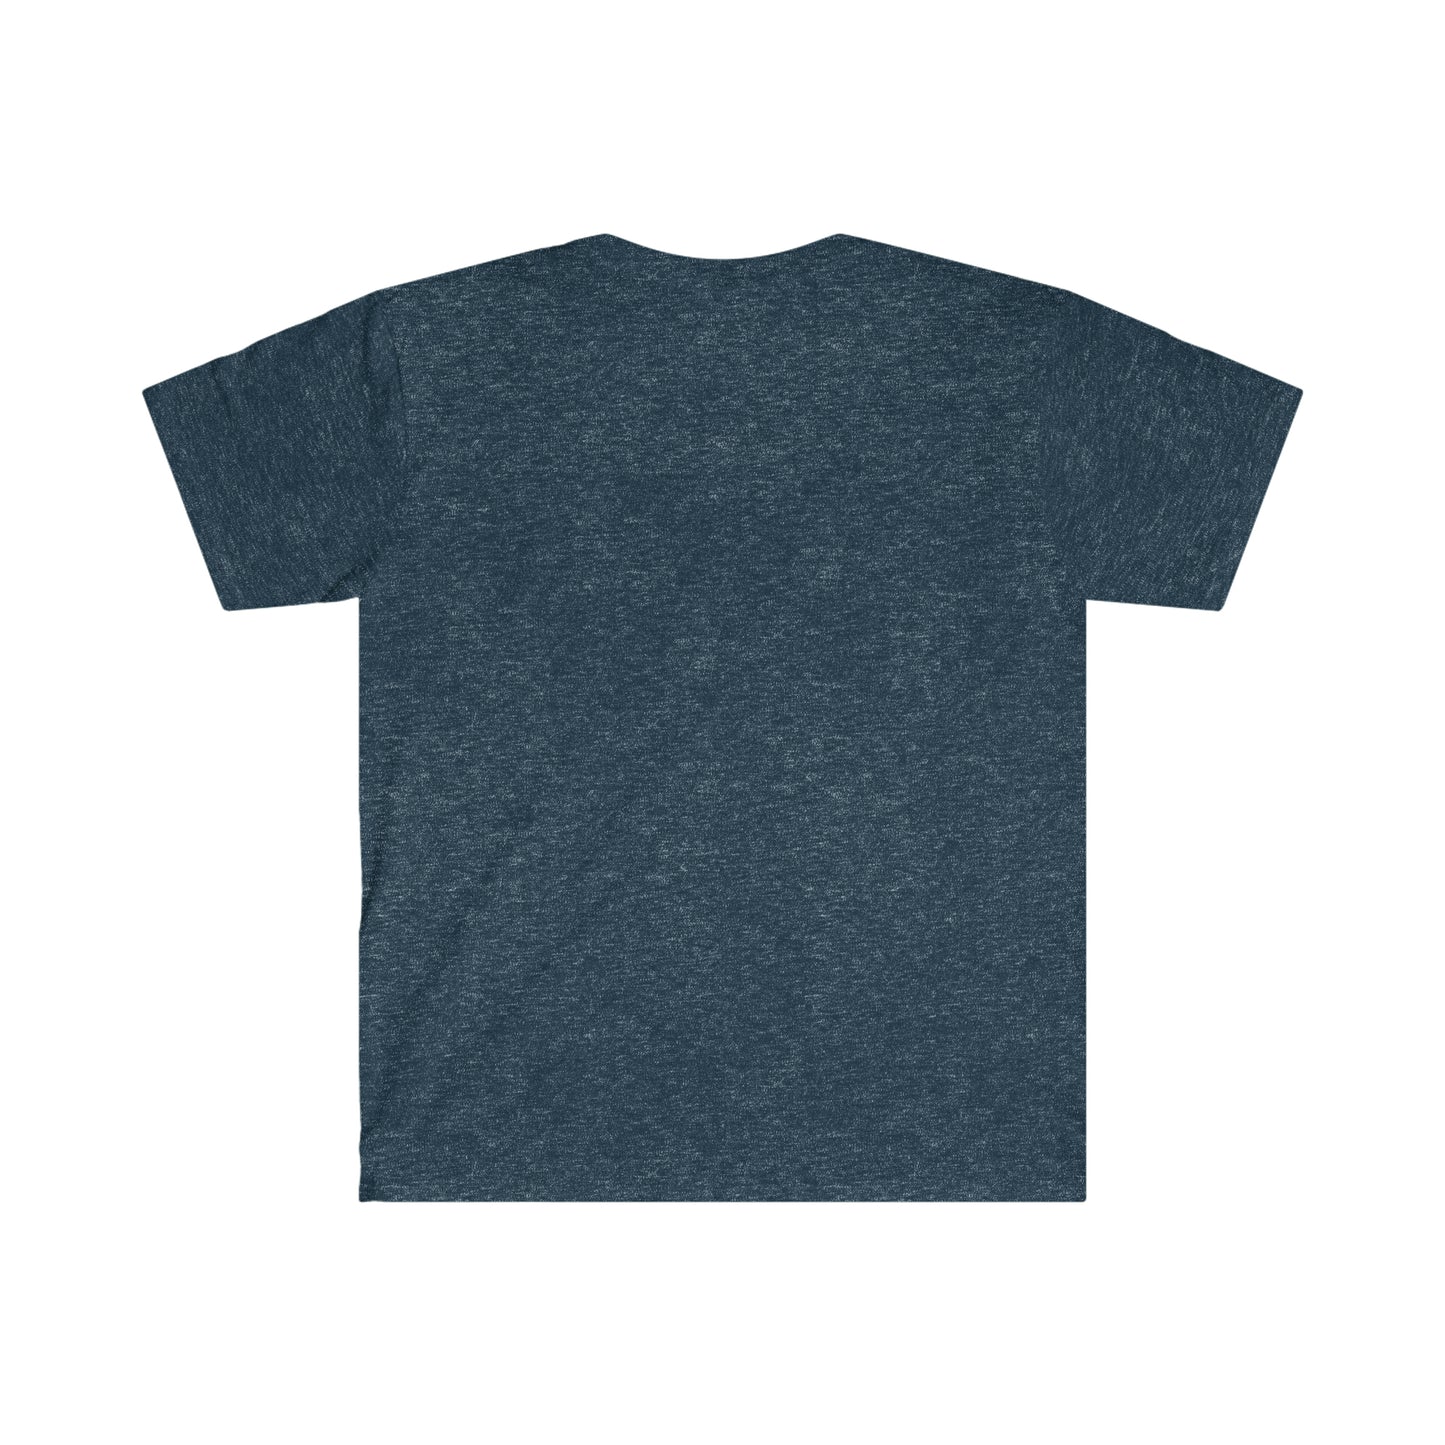 Murcielagos Necesitan Agave - Unisex Softstyle T-Shirt